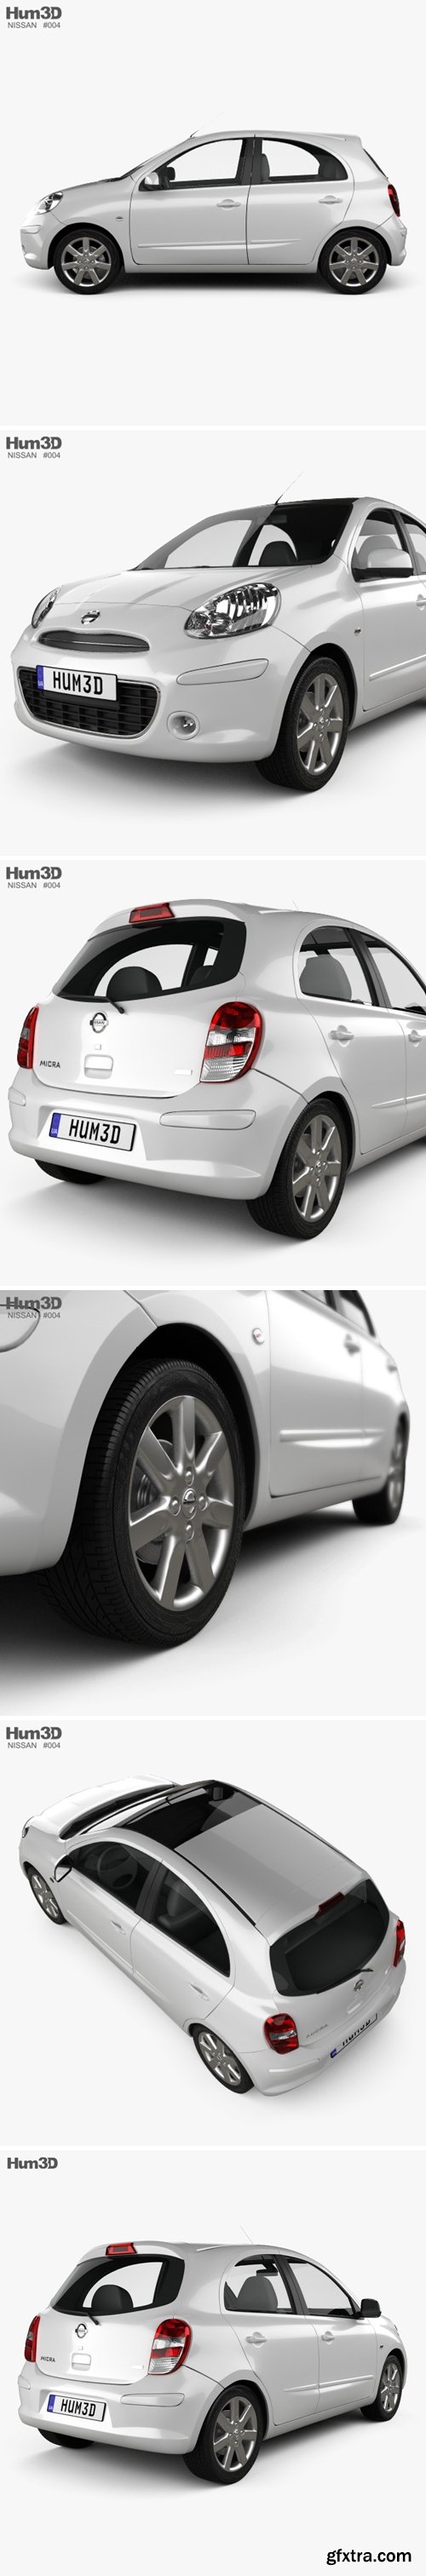 Nissan Micra (March) 2011 3D model